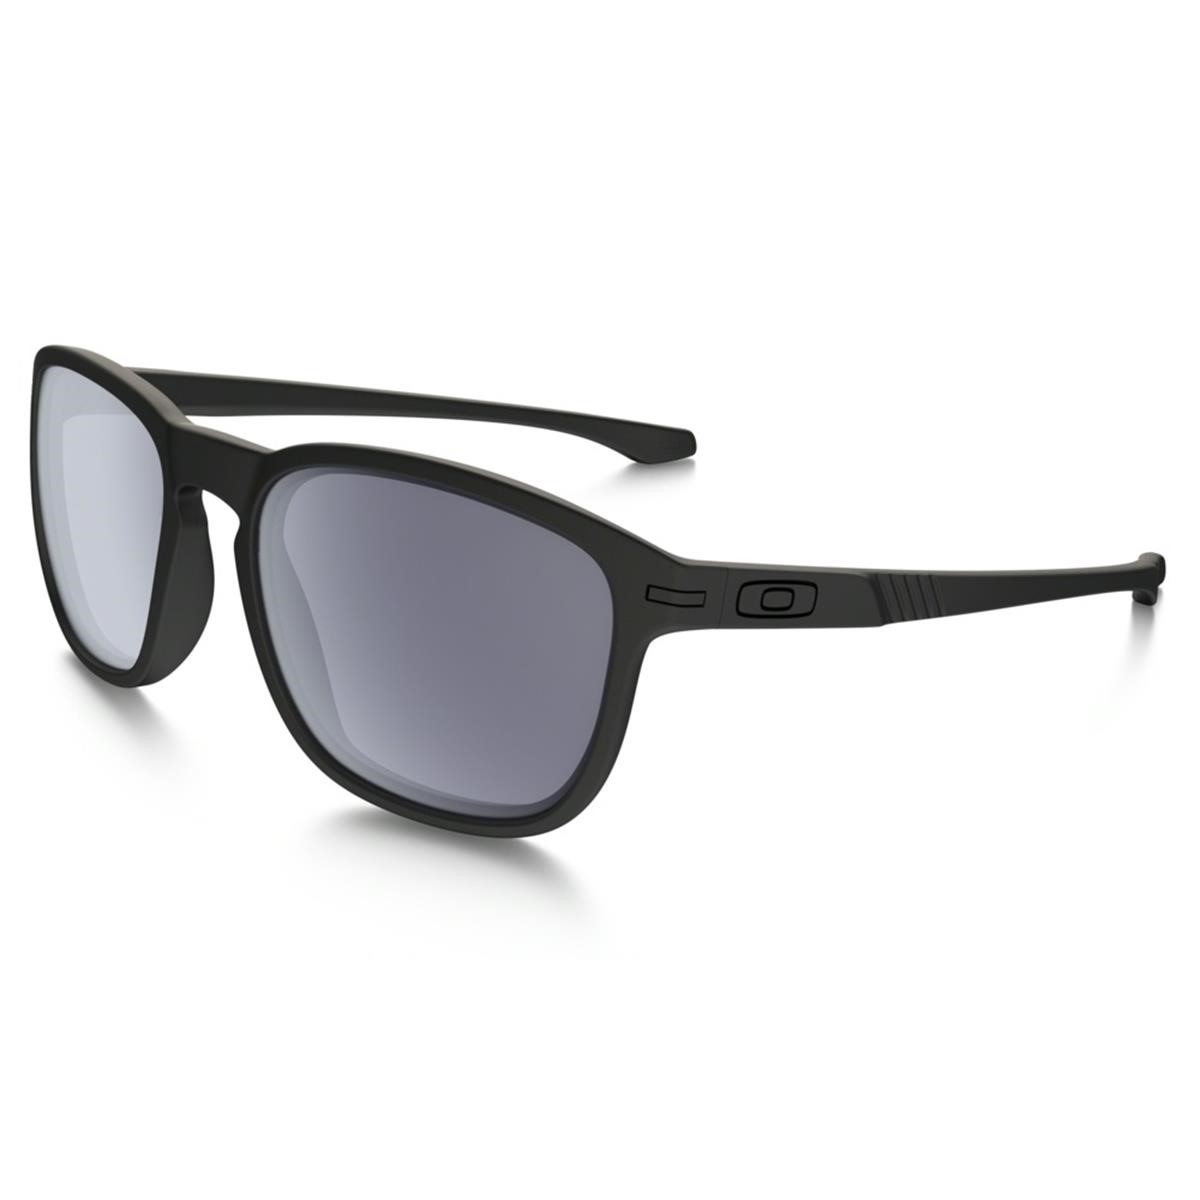 Oakley Sunglasses Enduro Covert Collection - Matte Black/Grey